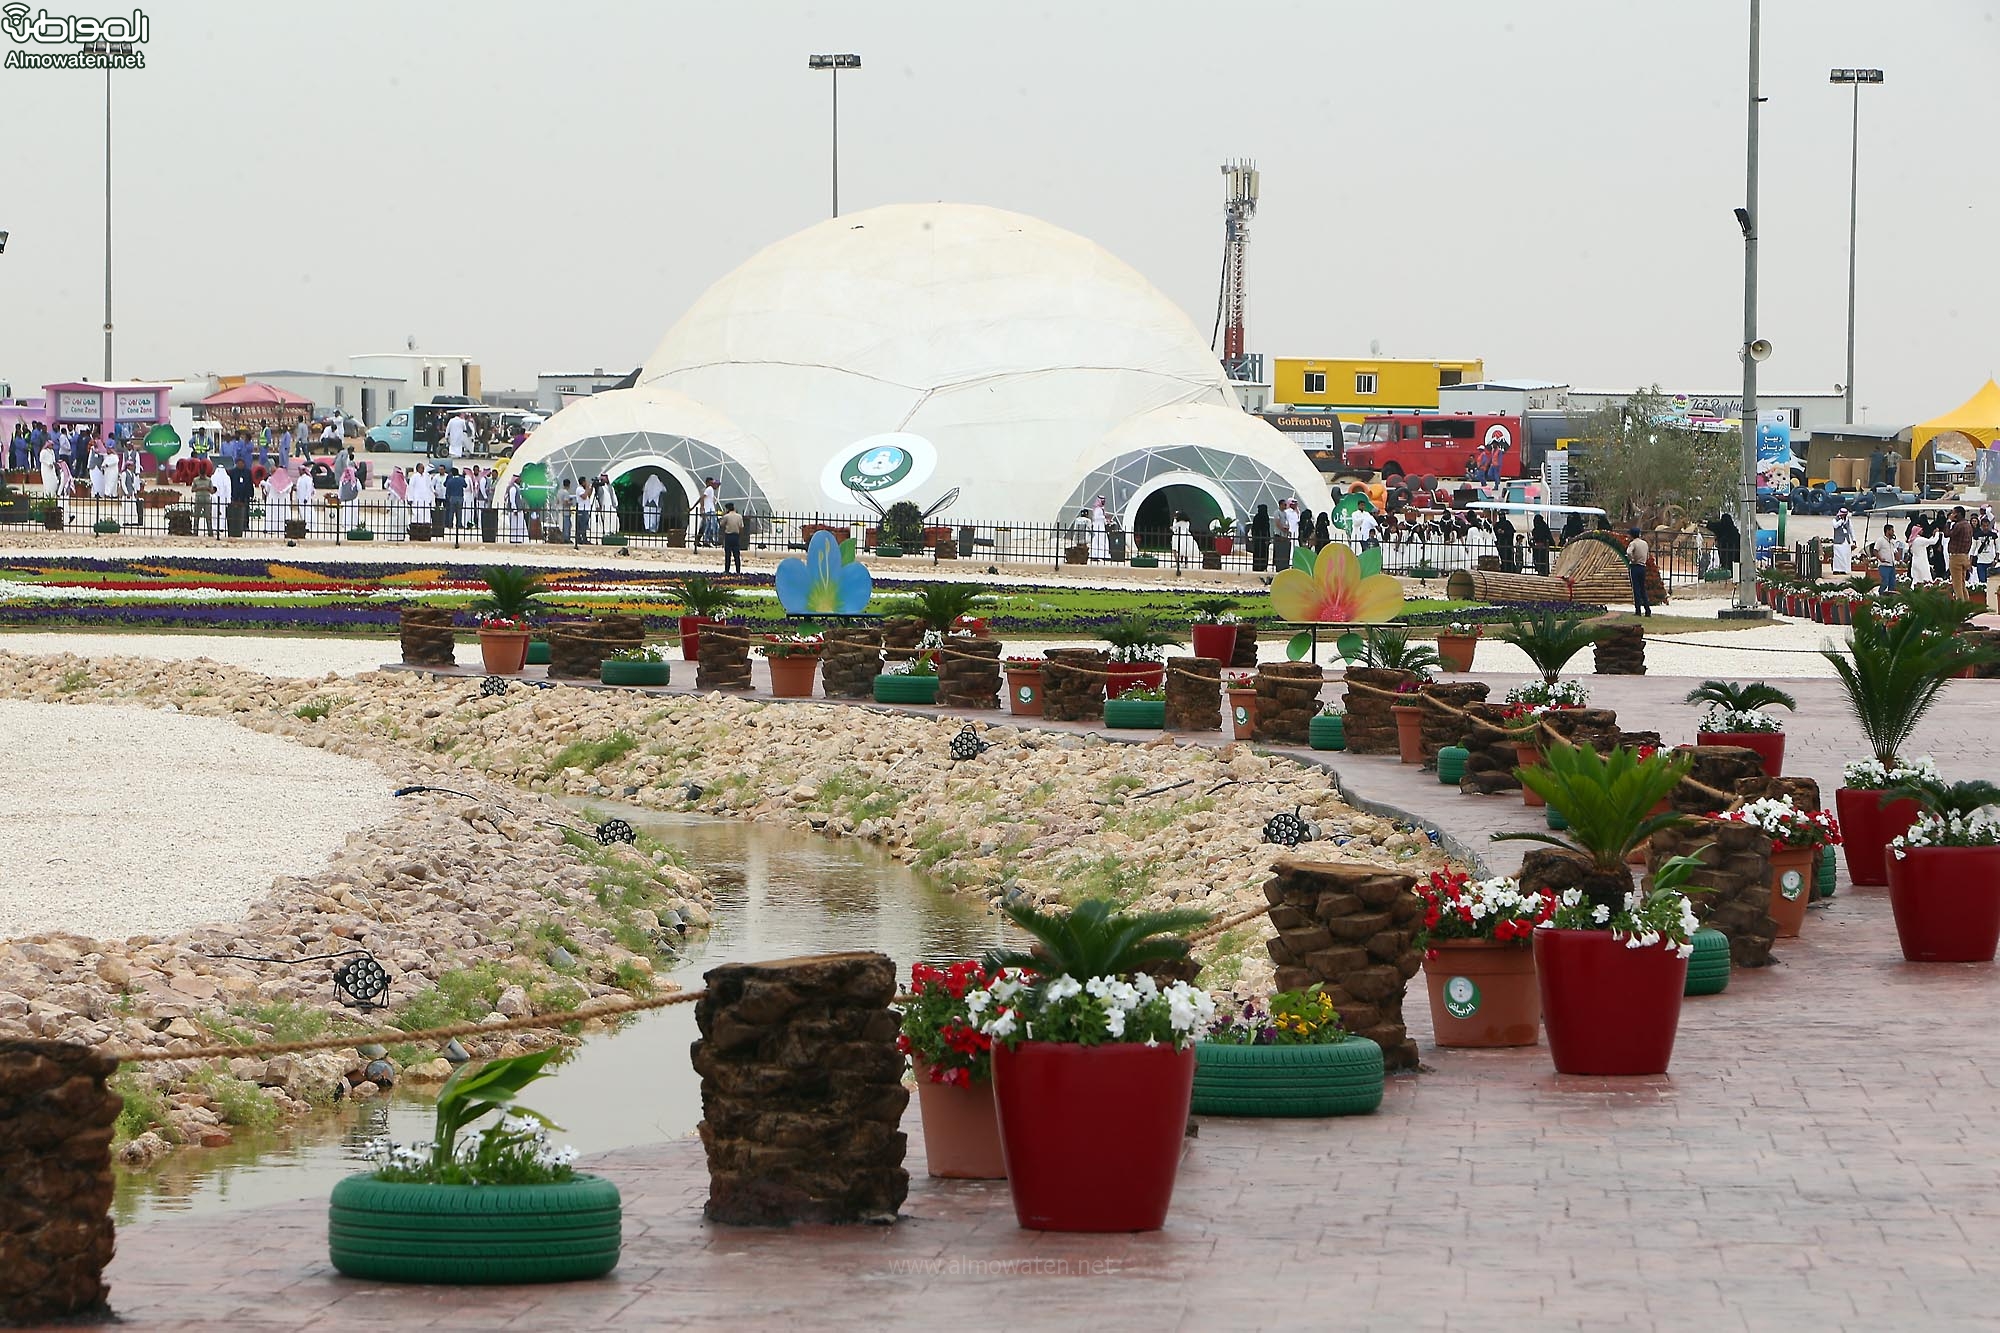 شاهد بالصور .. “ربيع الرياض” حدائق وزهور